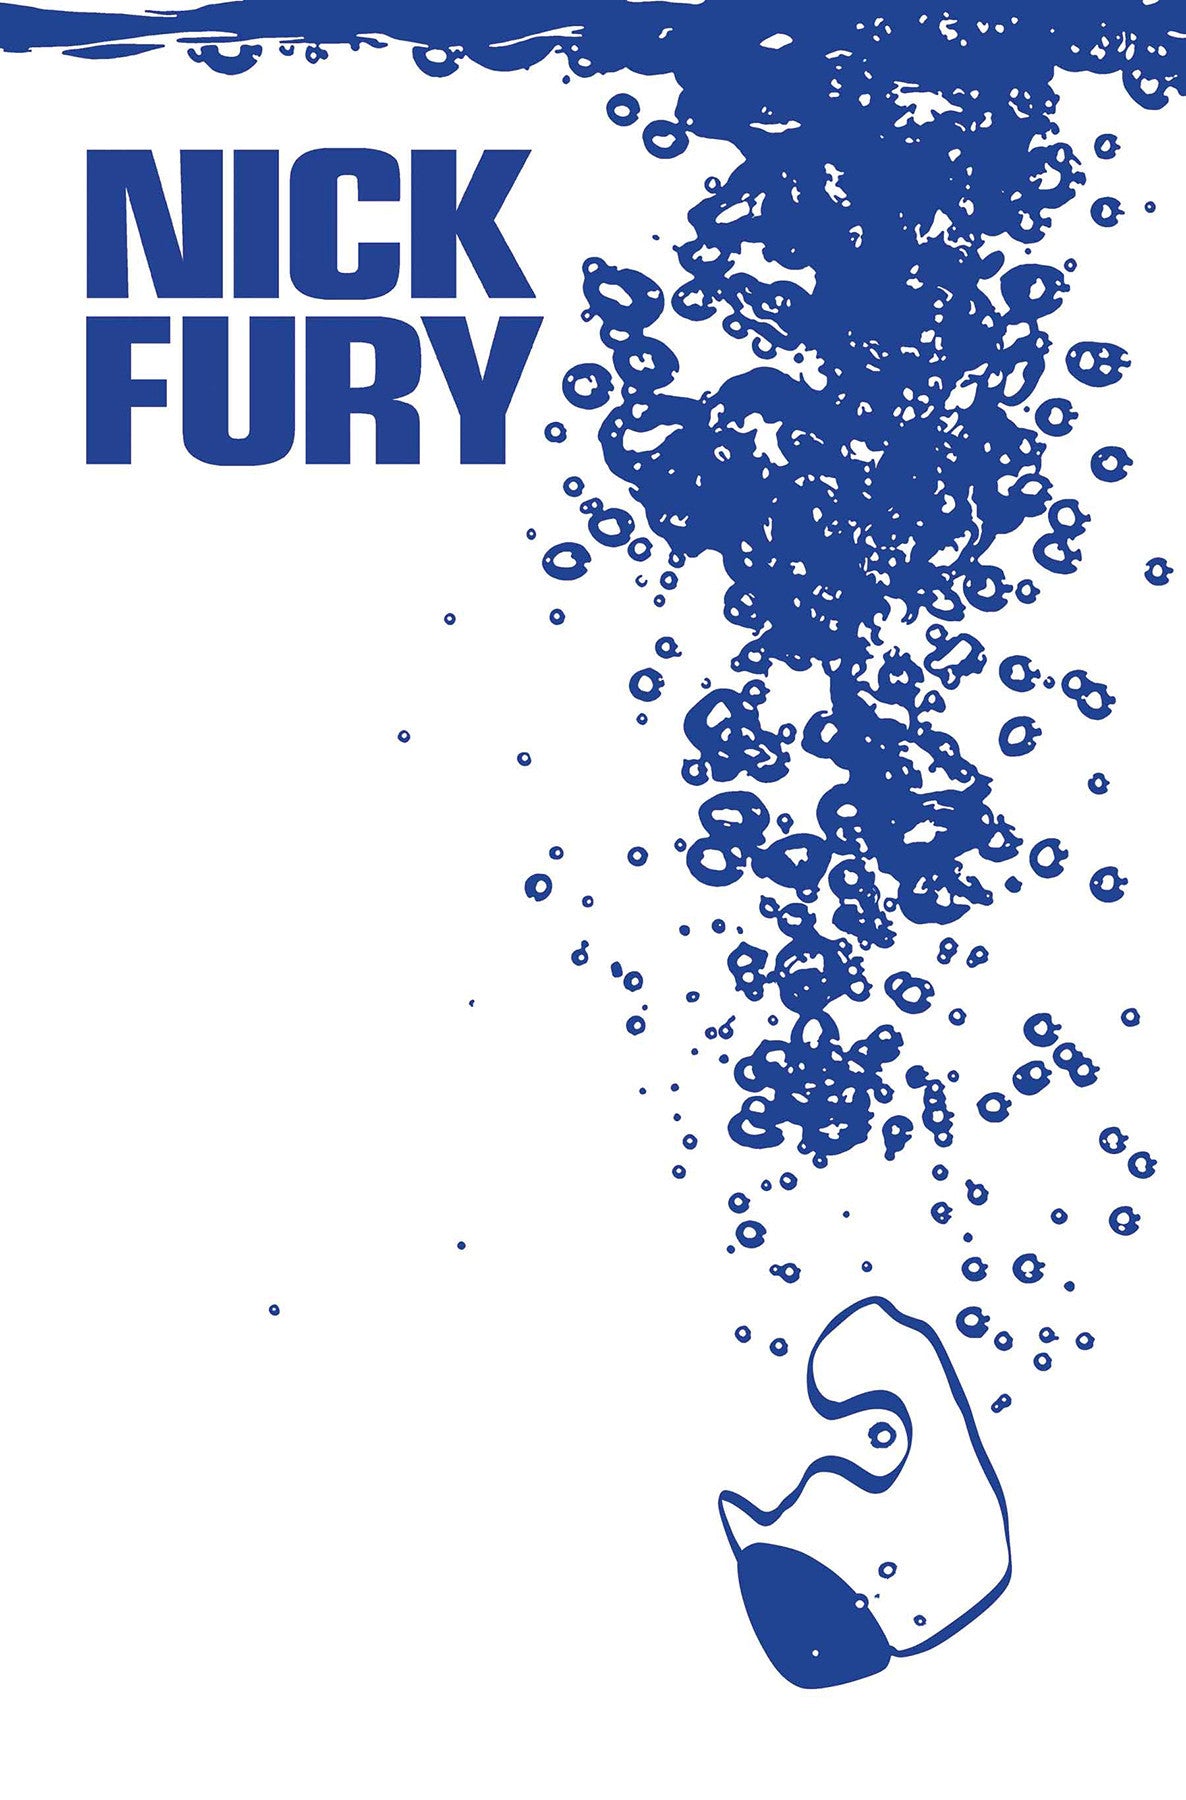 NICK FURY #4 COVER